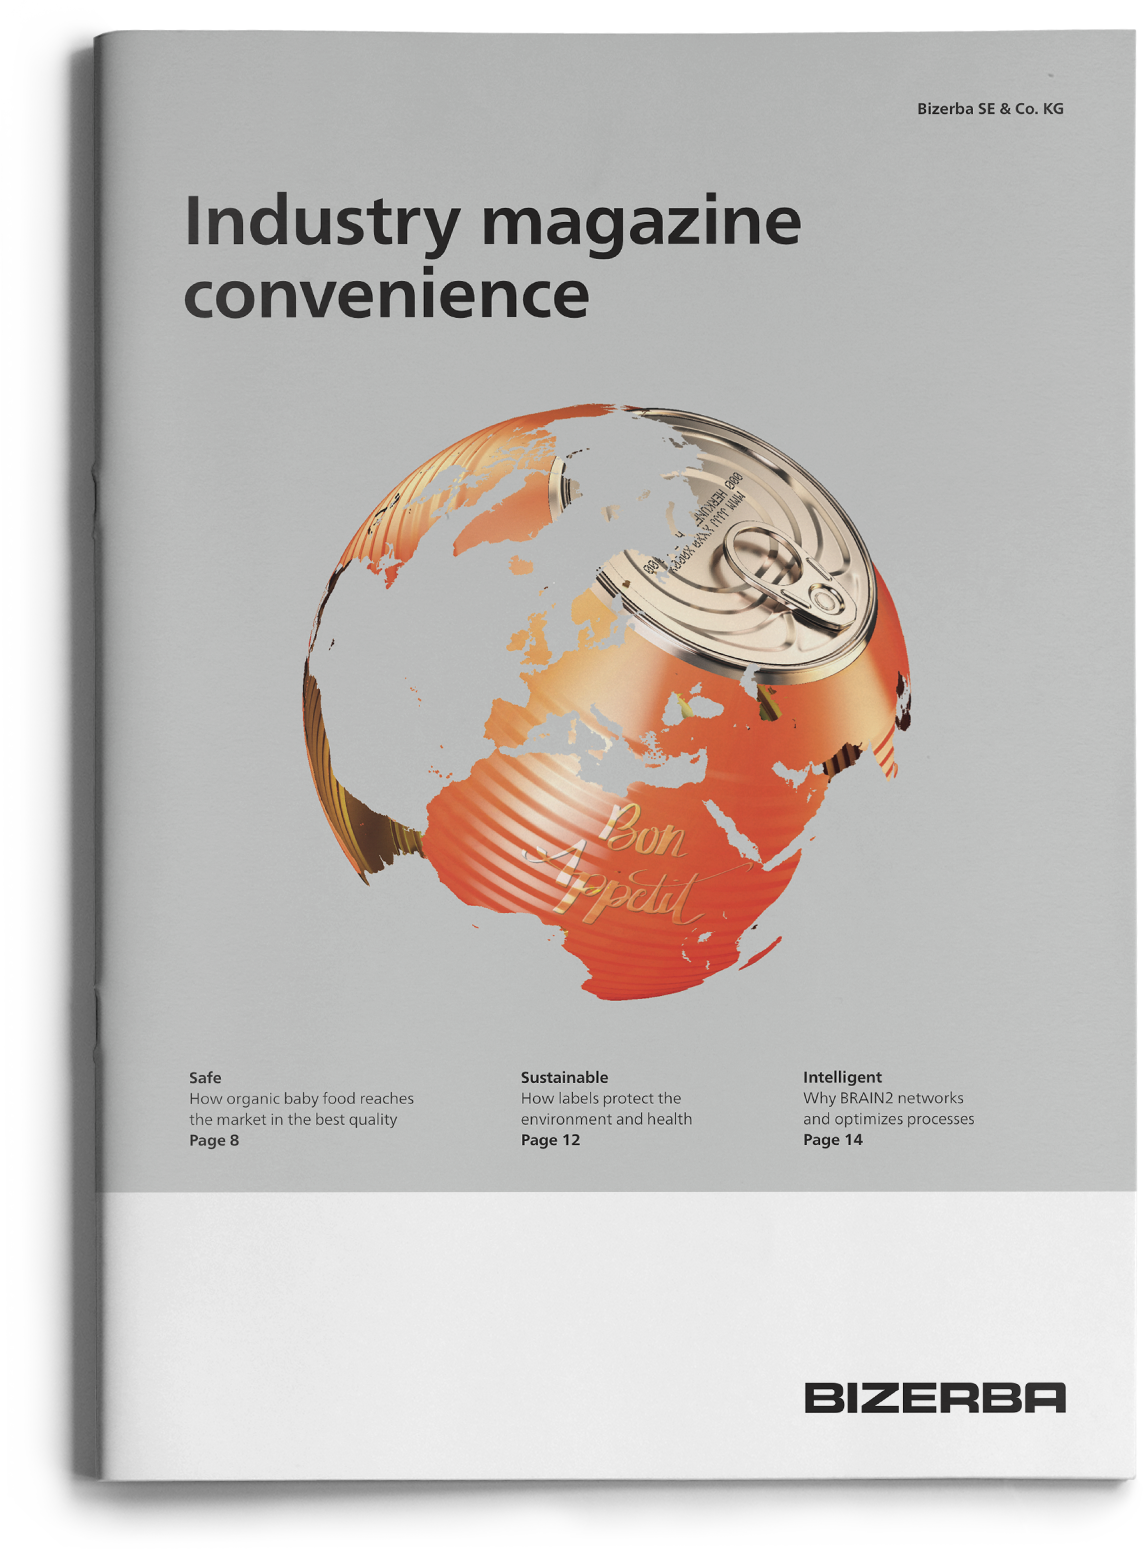 Industry magazine convenience